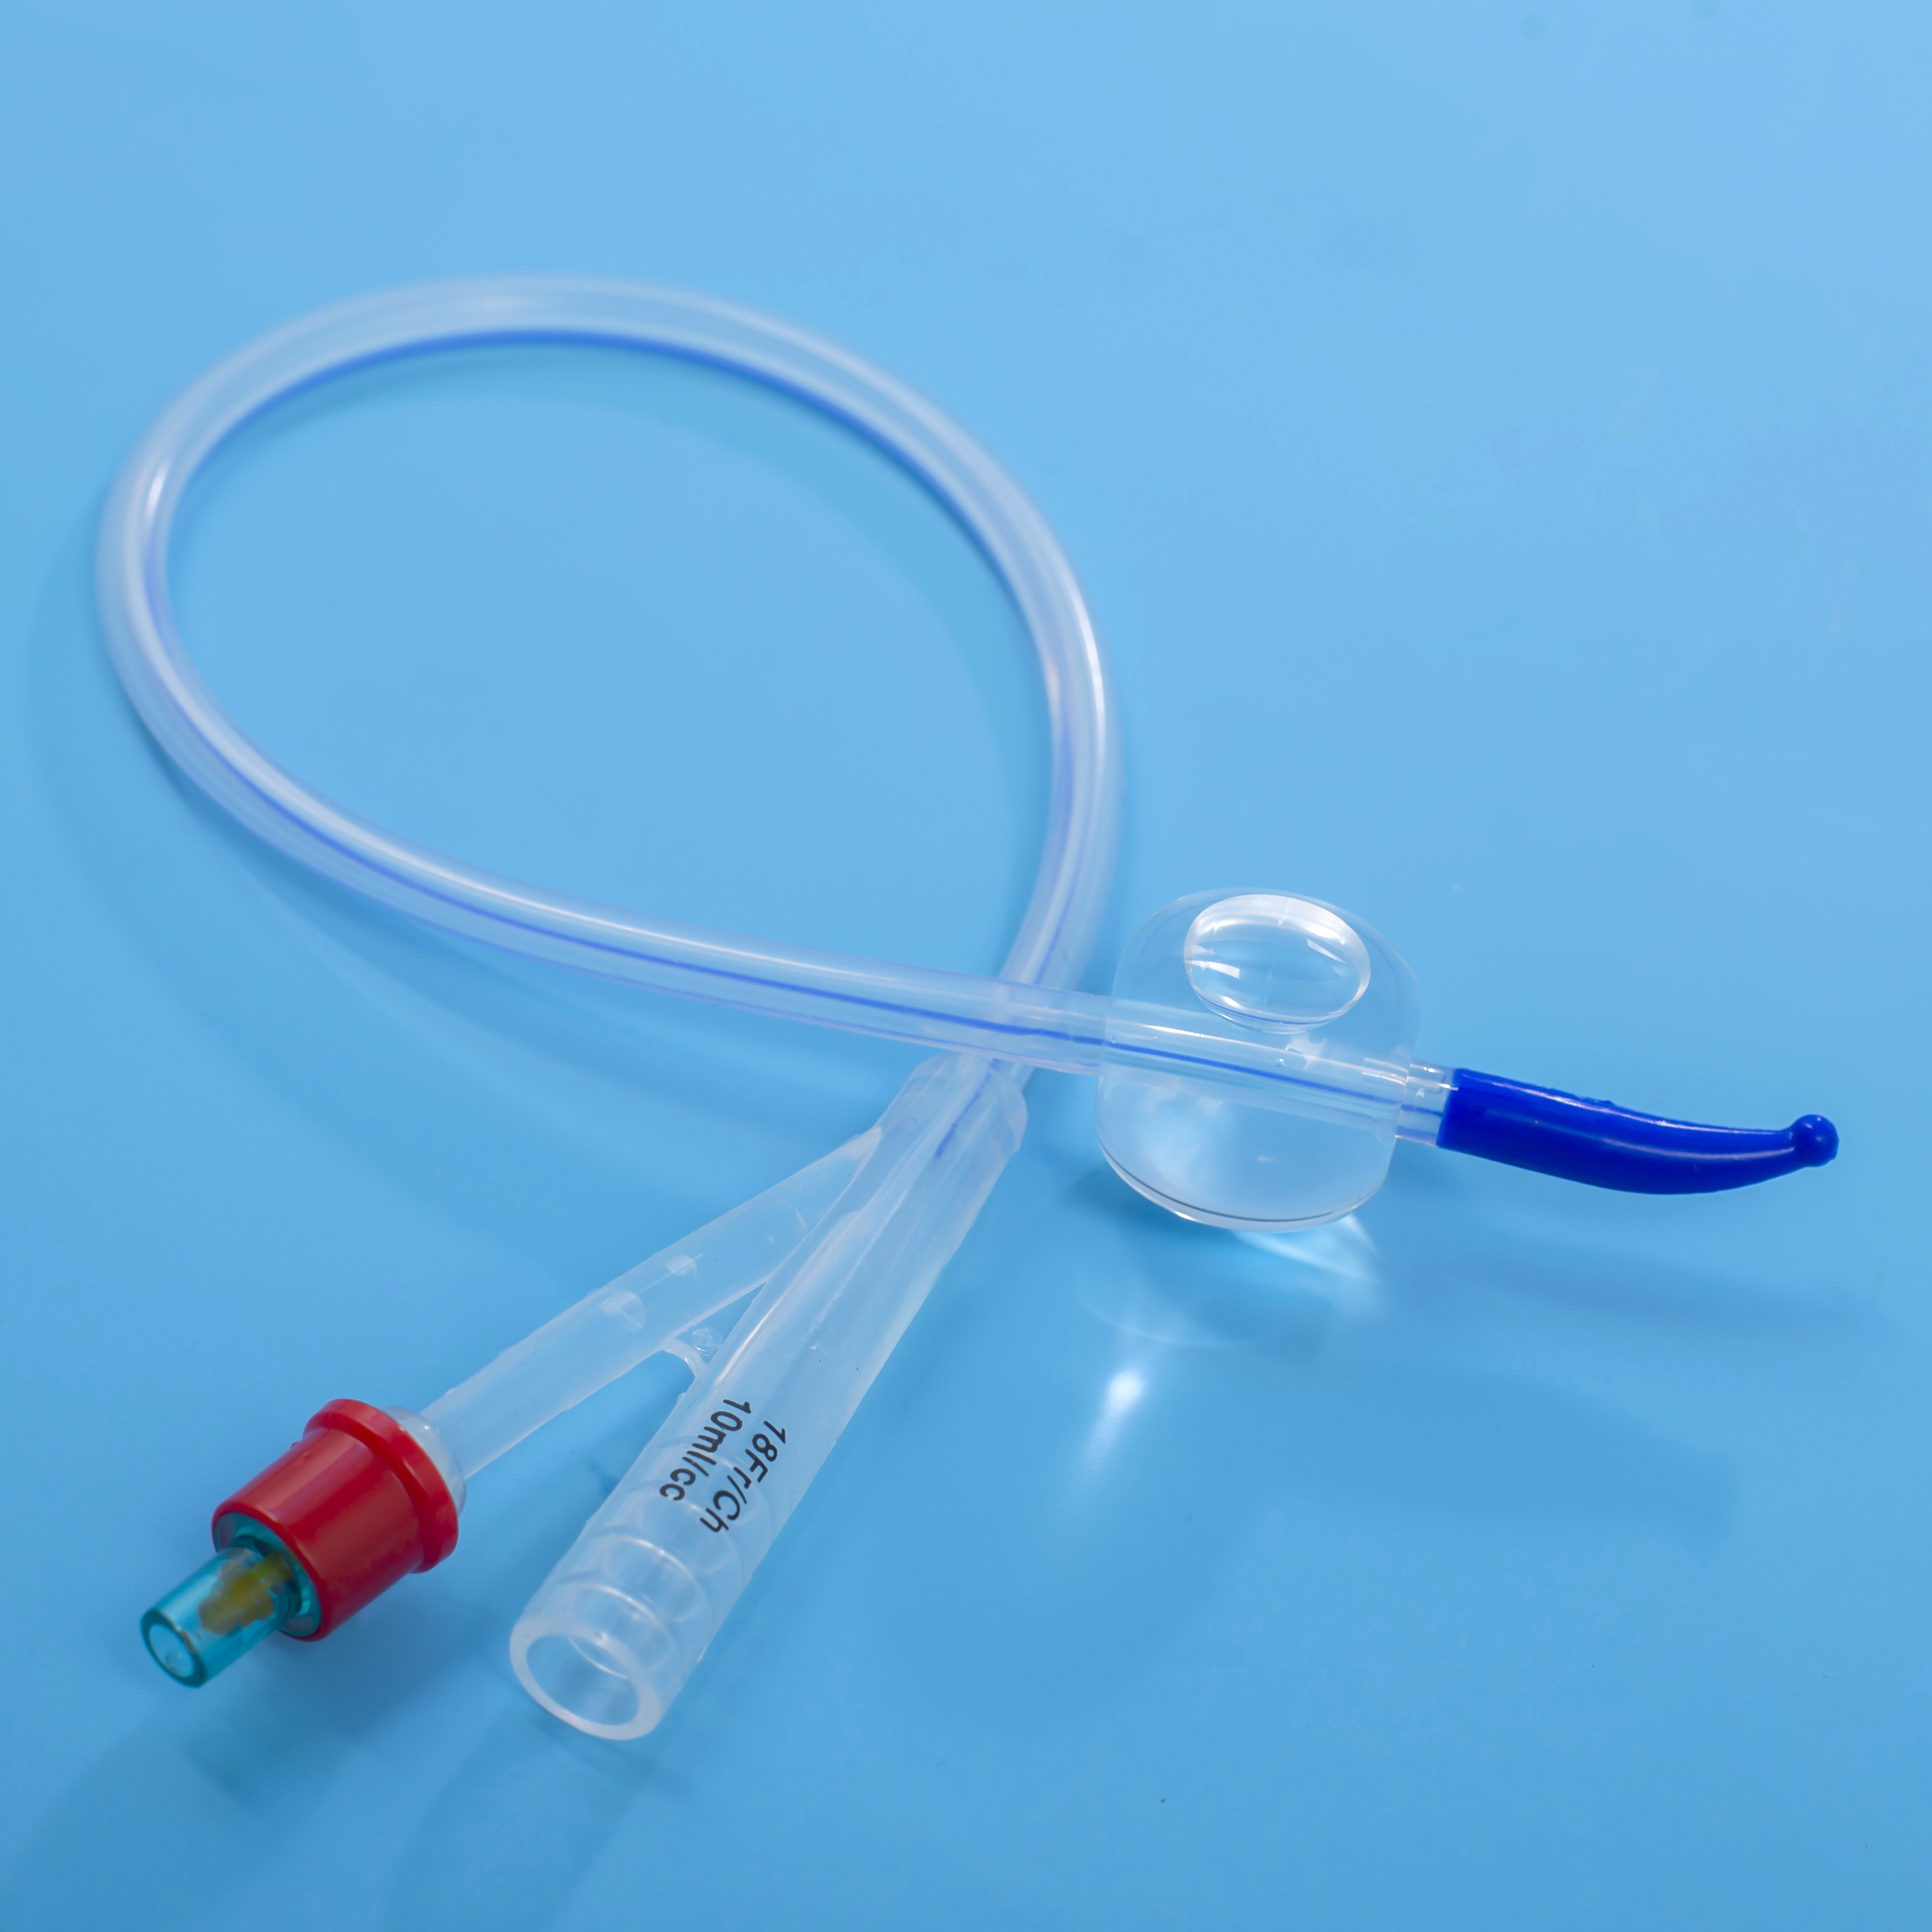 Unibal Integral Balloon နည်းပညာဖြင့် 2 Way Silicone Foley Catheter ပေါင်းစပ်ထားသော Flat Balloon Tiemann Tipped Urethral ကို အမျိုးသားများ အသုံးပြုရန်၊